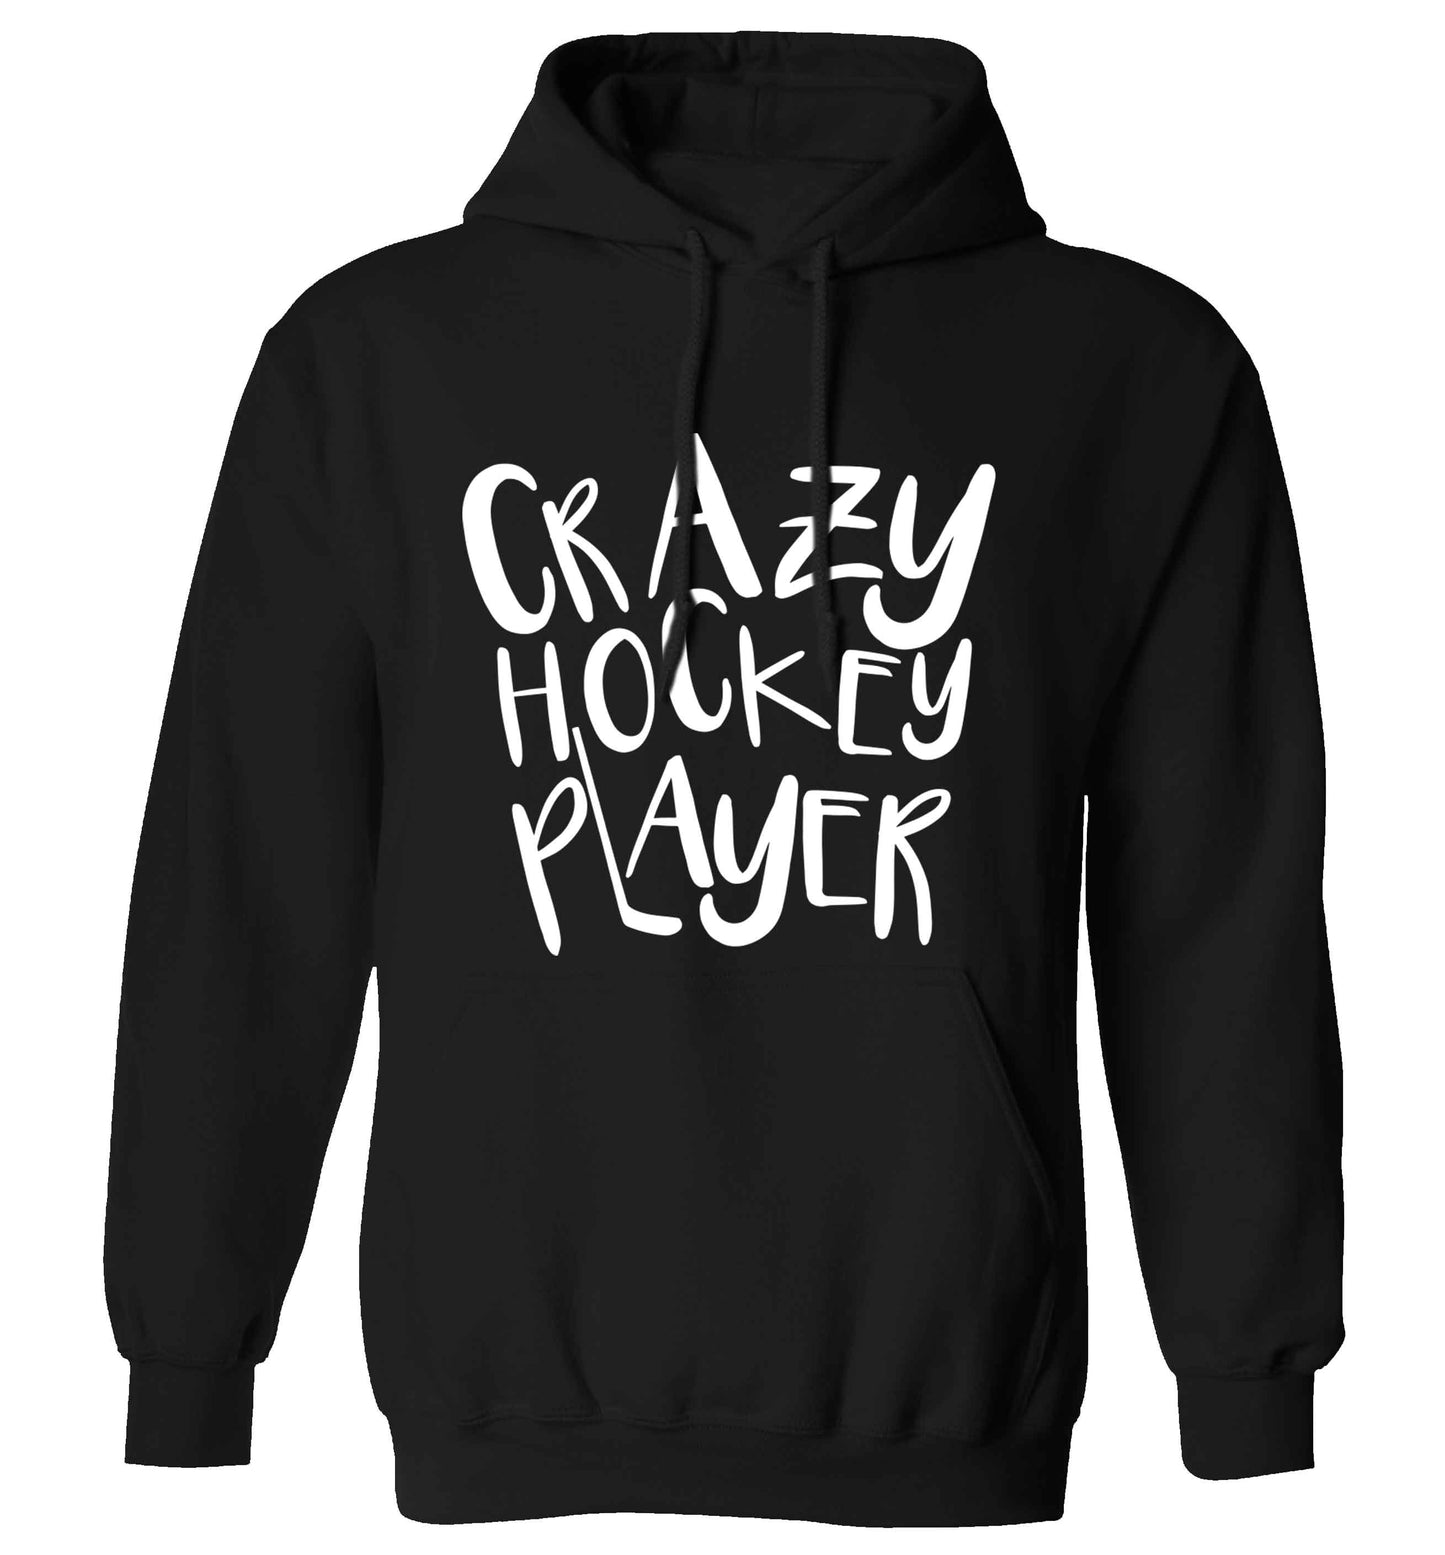 Crazy hockey player adults unisex black hoodie 2XL